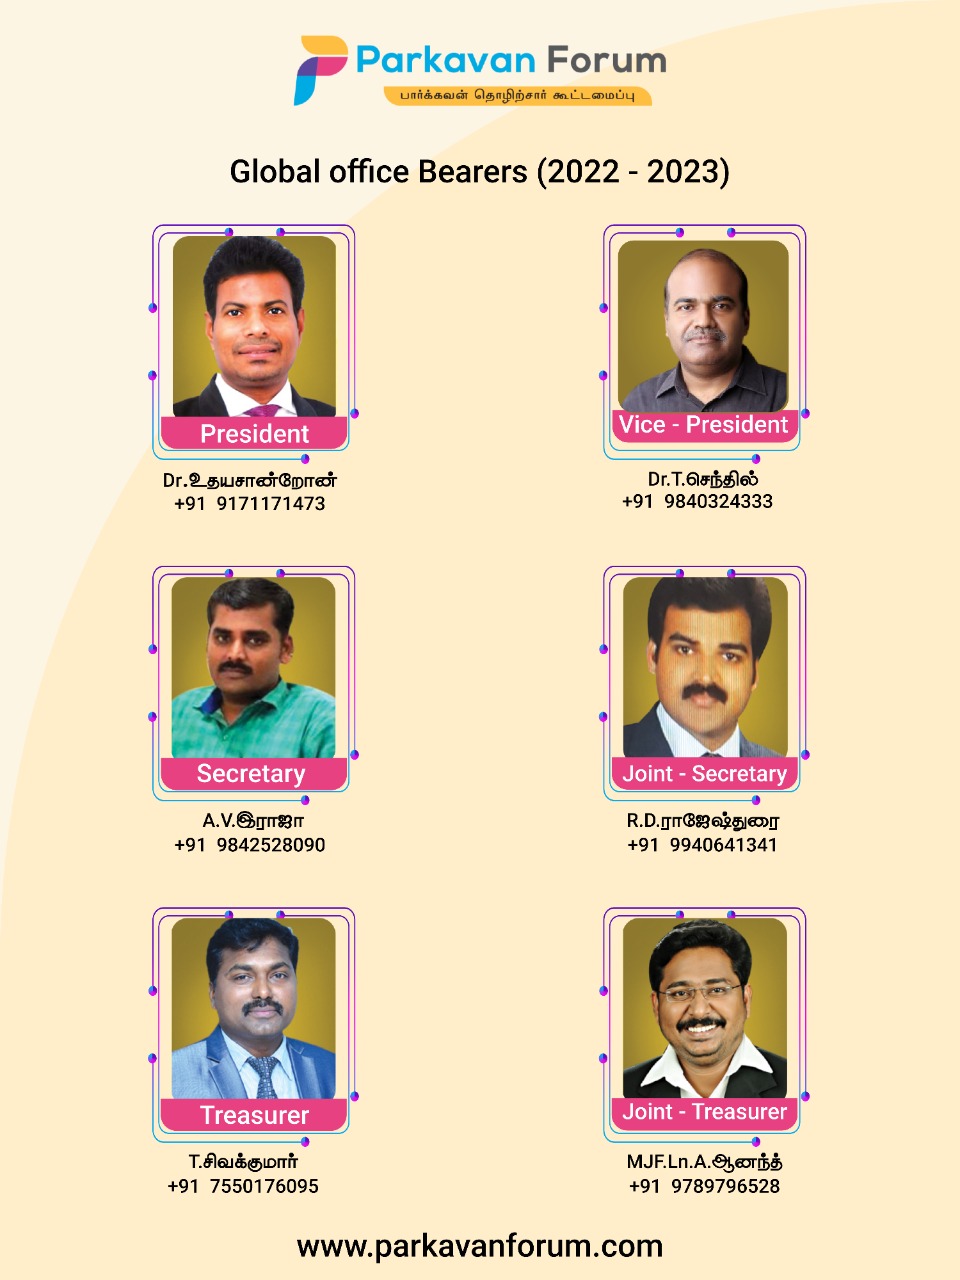 Global Office Bearers of Parkavan Forum – 2022 -2023